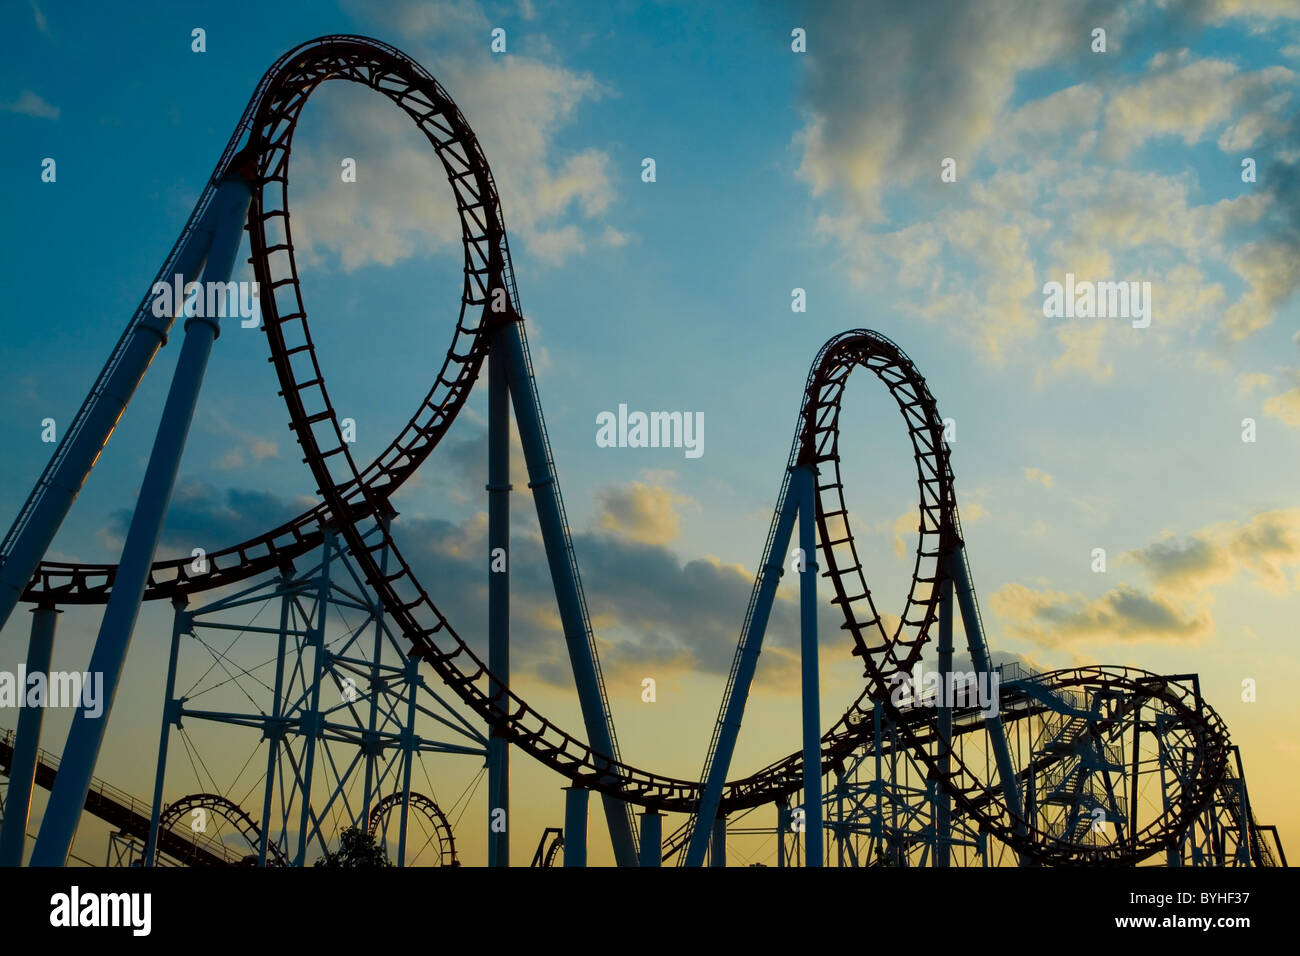 Roller Coaster at Sunset Stock Photo - Alamy